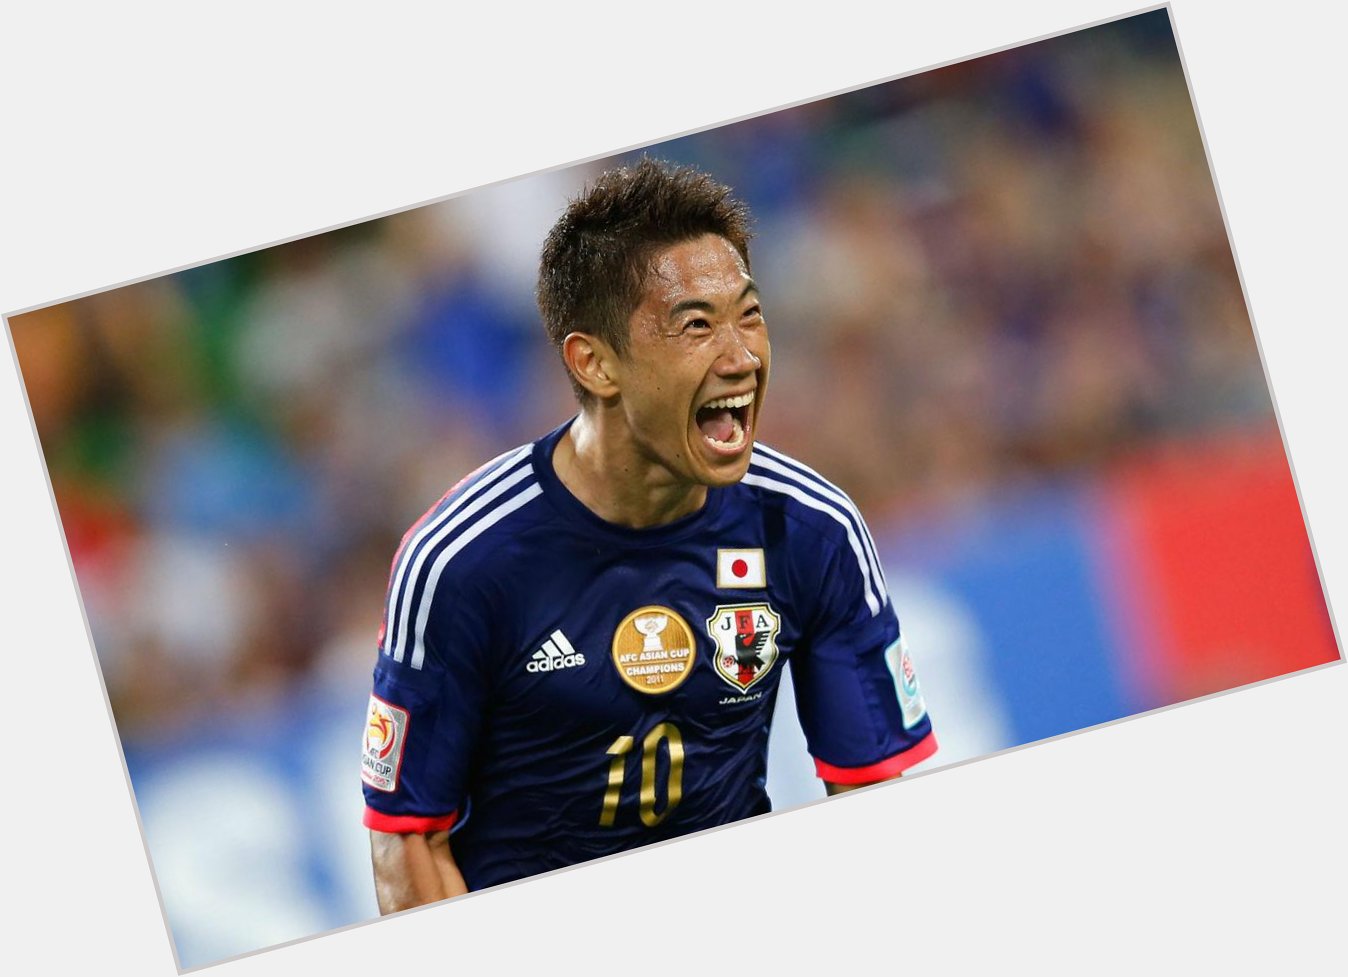 Happy birthday, Shinji Kagawa! The Borussia Dortmund and Japan midfielder turns 26 today. 